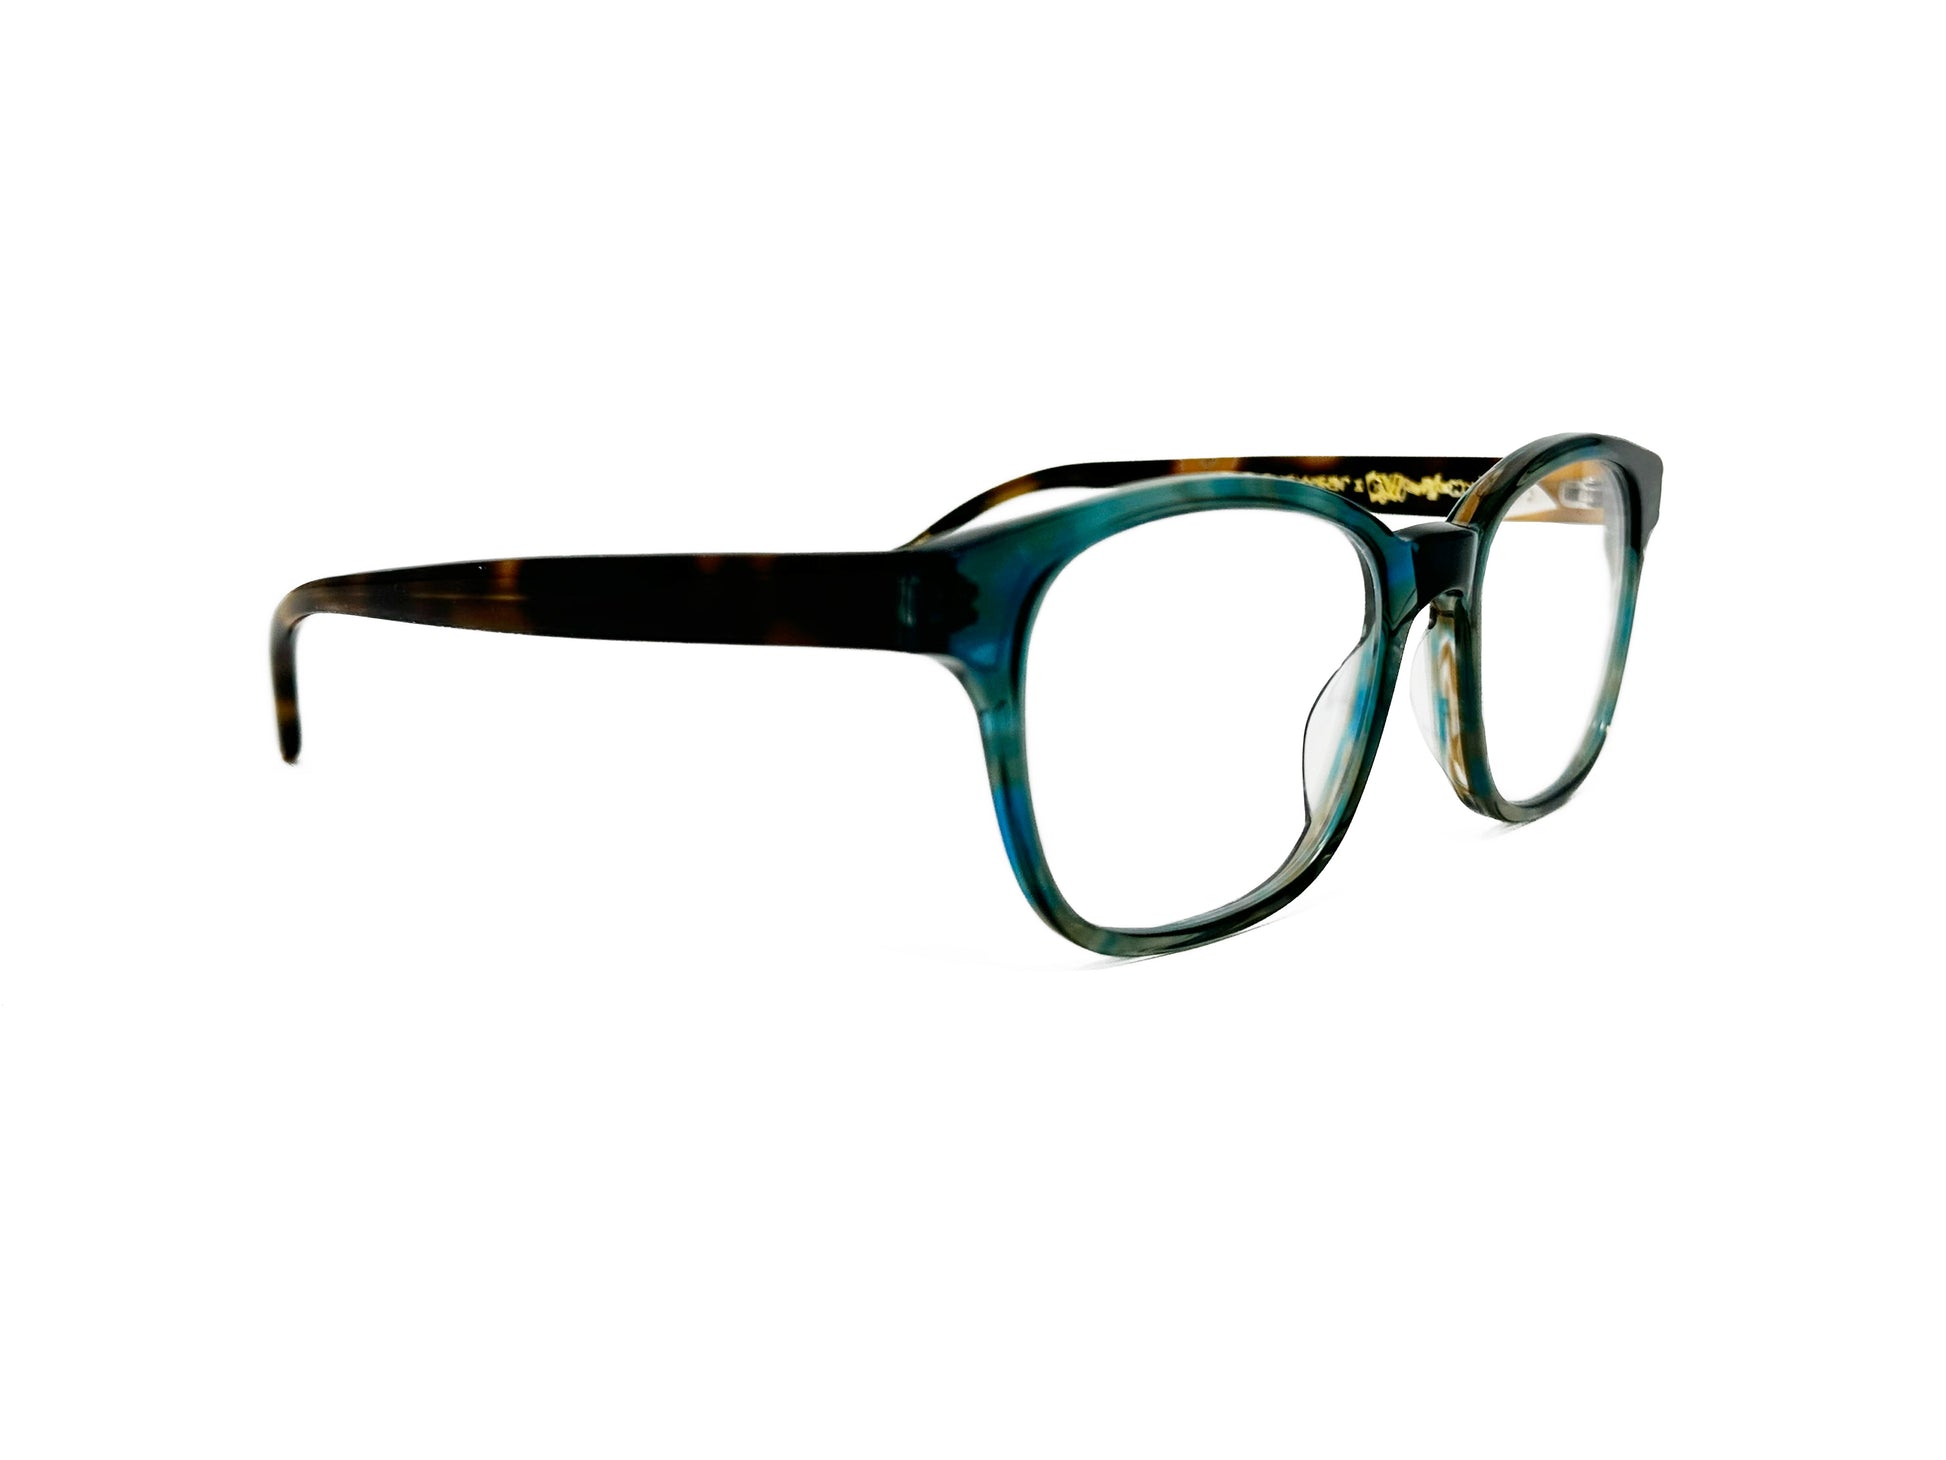 Kala Eyewear square acetate optical frame. Model: Morgan Freeman. Color: AAR - Blue/Green marble. Side view.